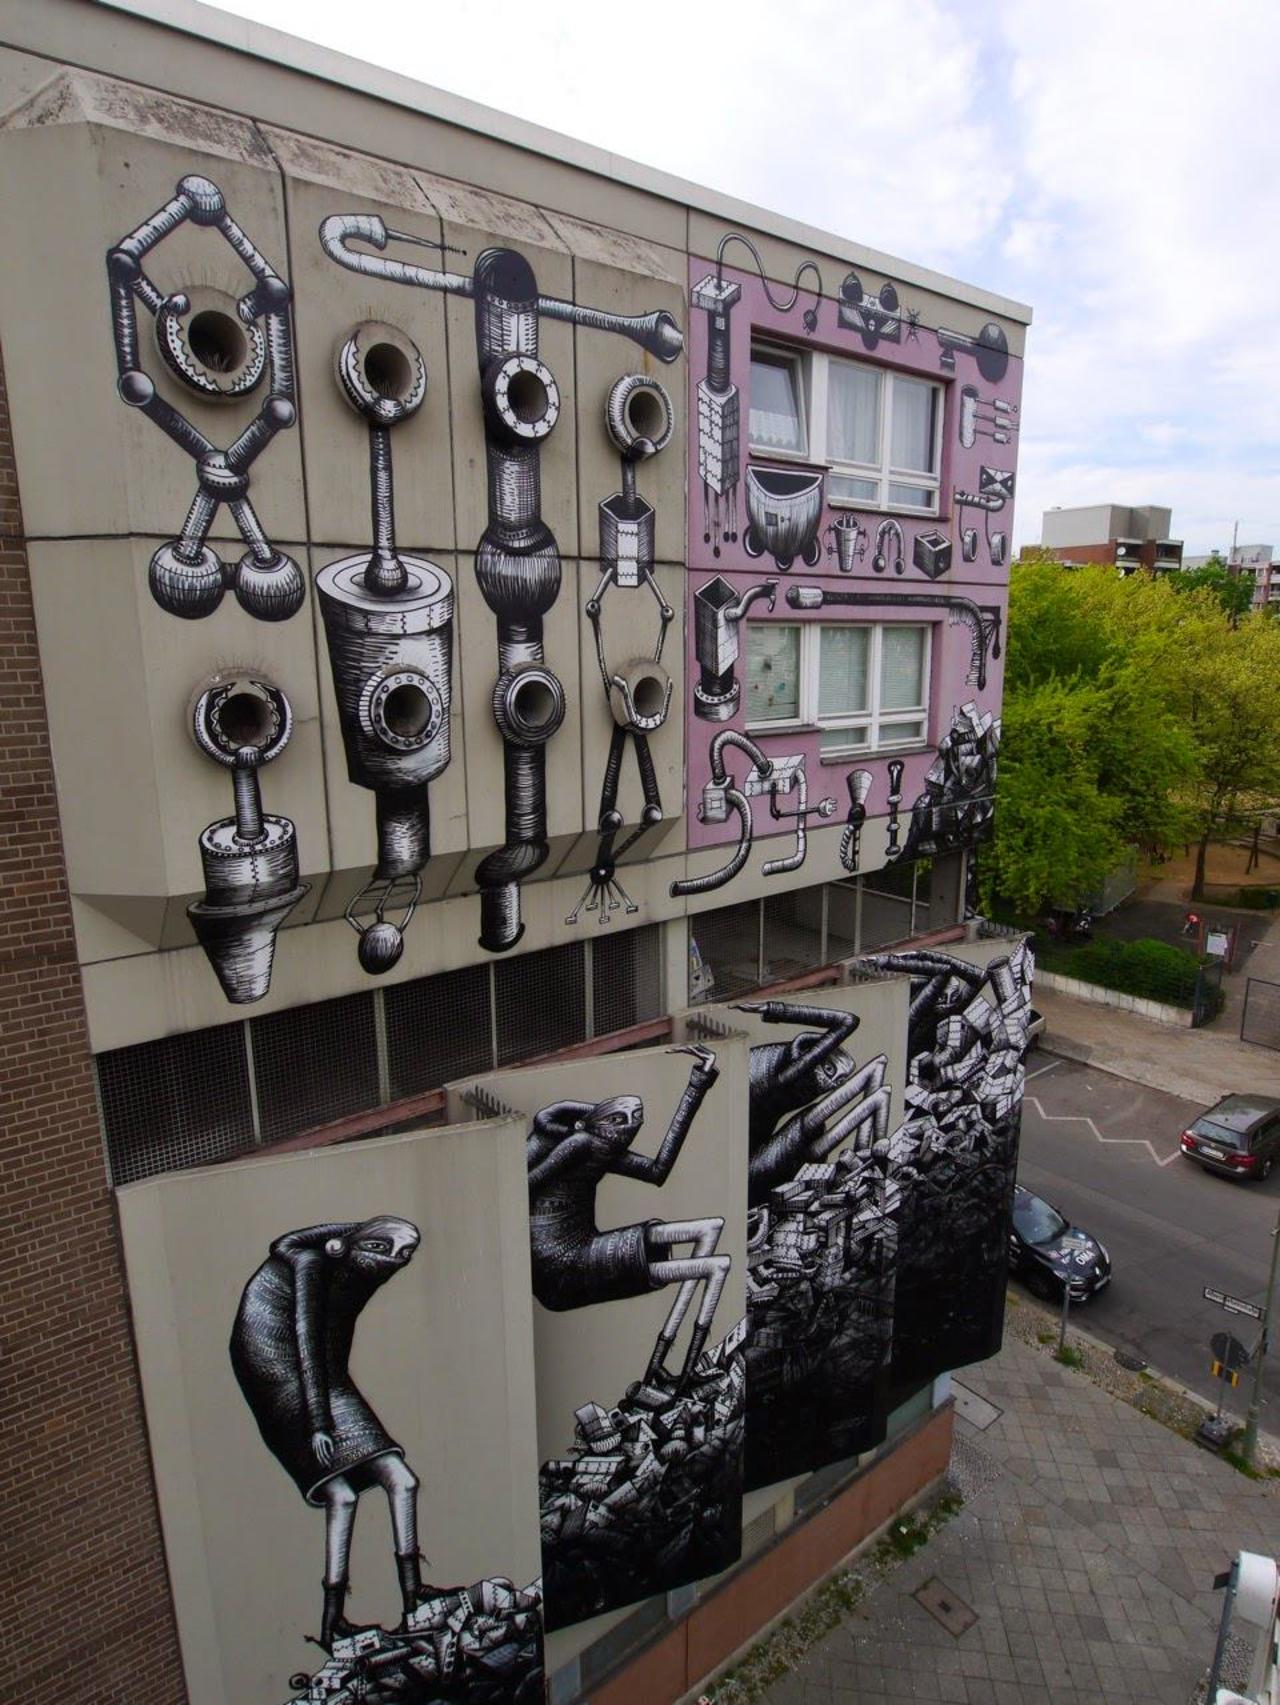 RT @Brindille_: #Streetart #urbanart #graffiti #painting #mural by English #artist Phlegm in Berlin, Germany http://t.co/lDdngOxgpg